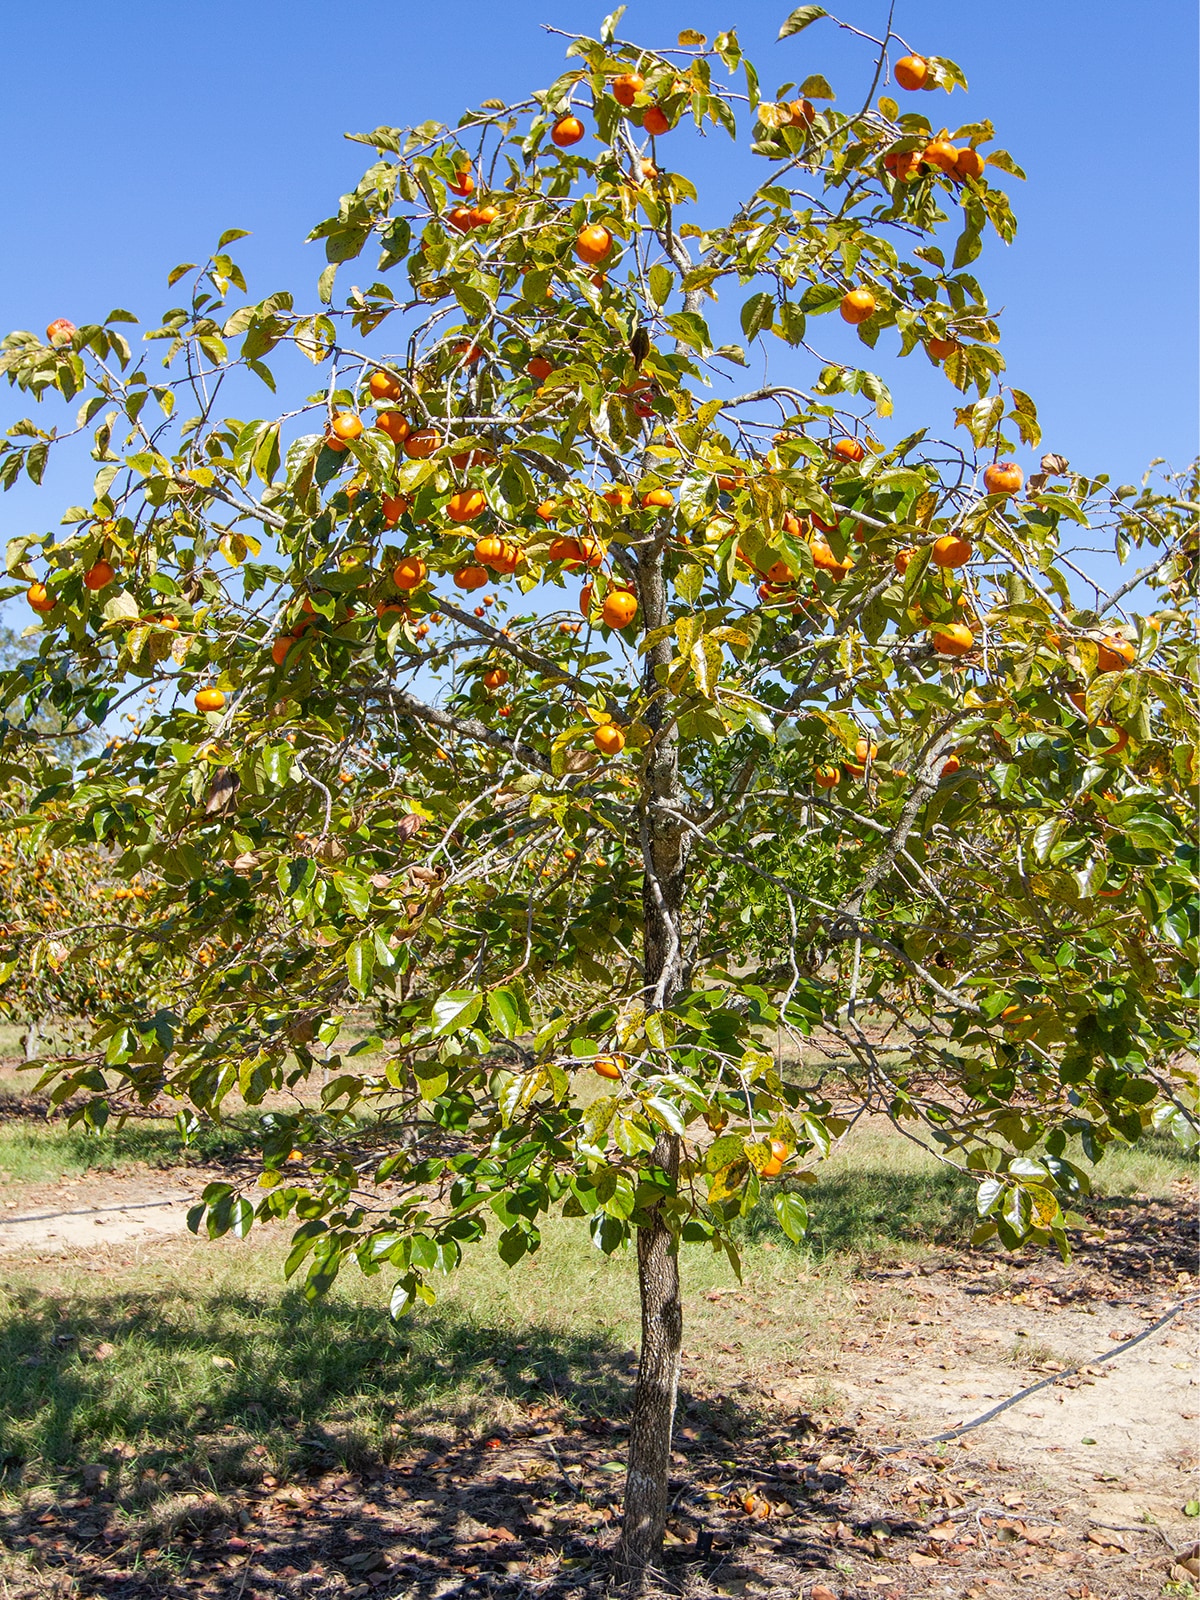 Lowe's Fuyu Persimmon Tree (Diospyros kaki 'Fuyu') - Medium Growth Rate,  Full Sun, Fruit-Bearing, Ornamental Tree in the Fruit Plants department at